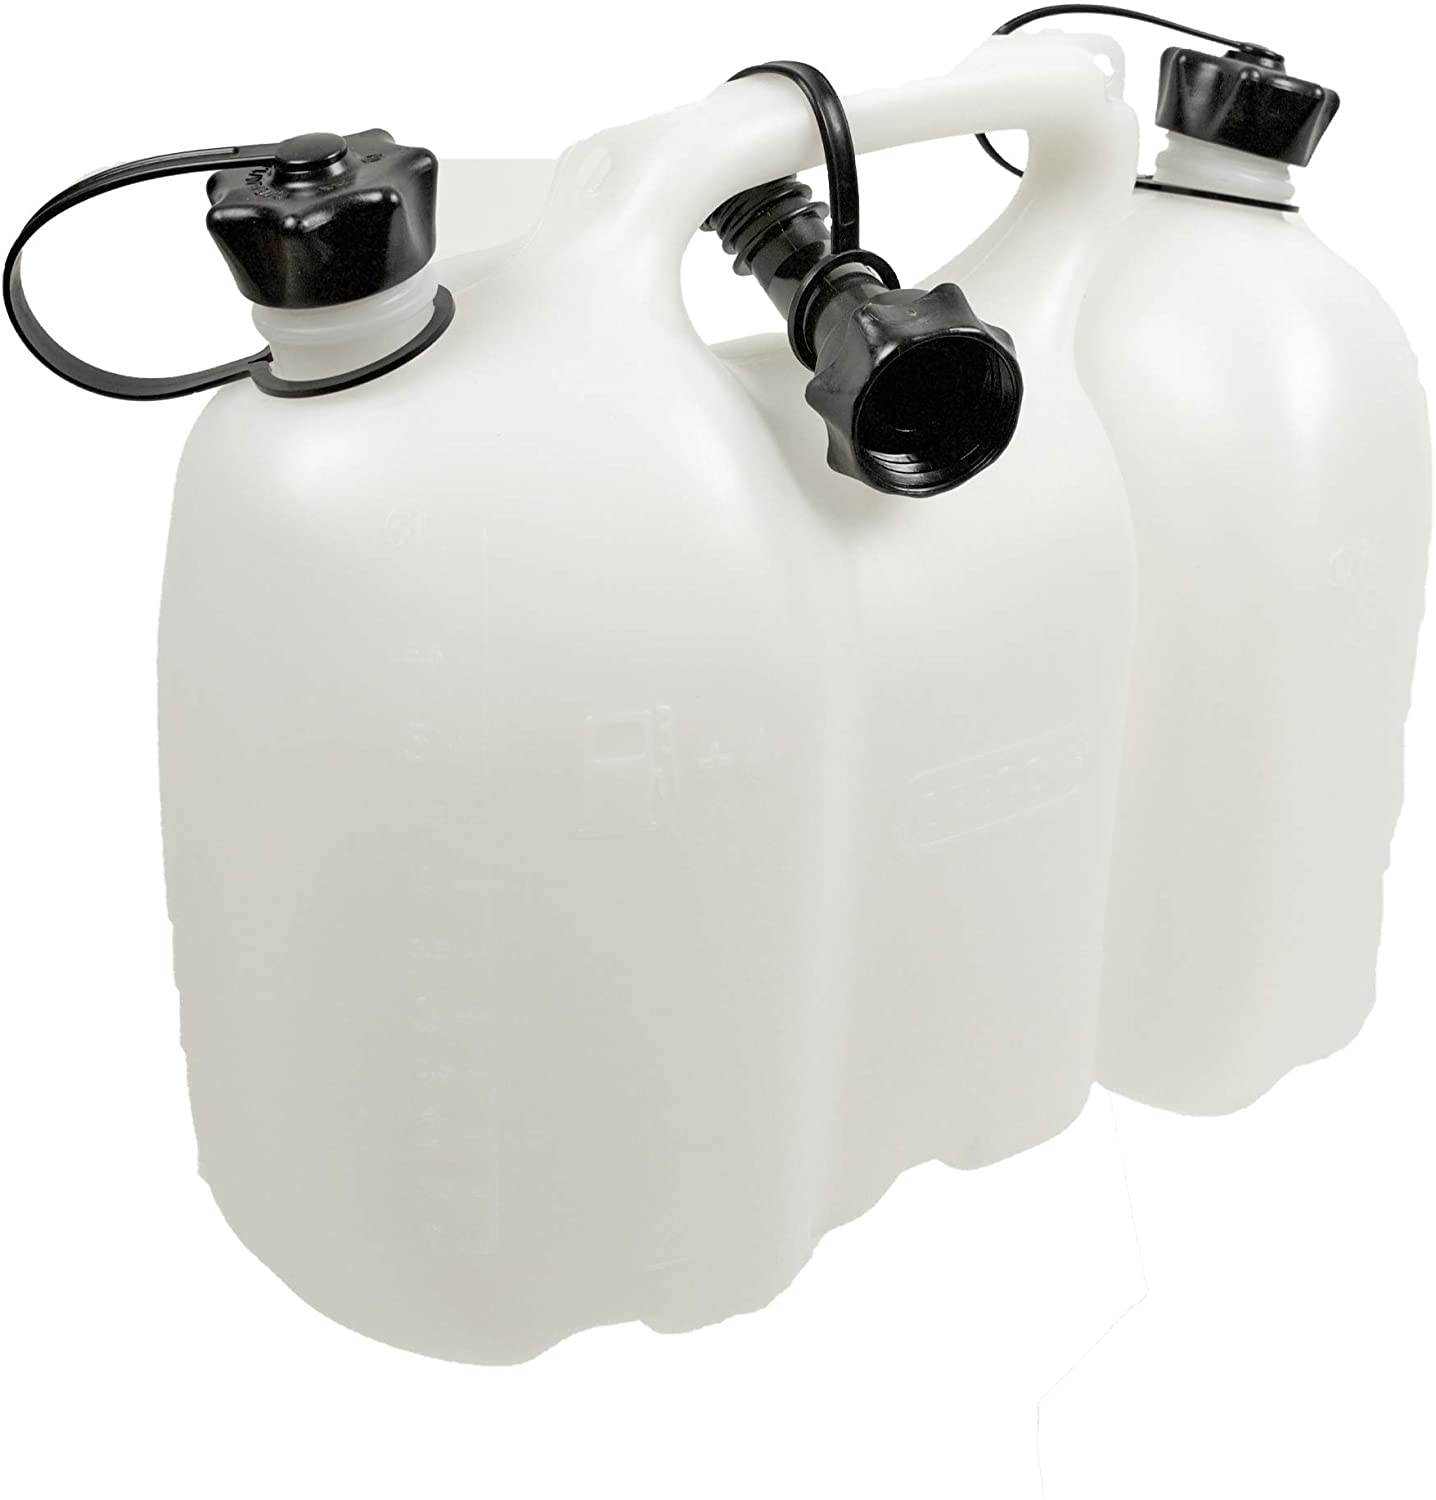 Oregon Doppelkanister Transparent Gemischkanister Doppel-Kanister 6 + 3  Liter Reservekanister Kunststoff